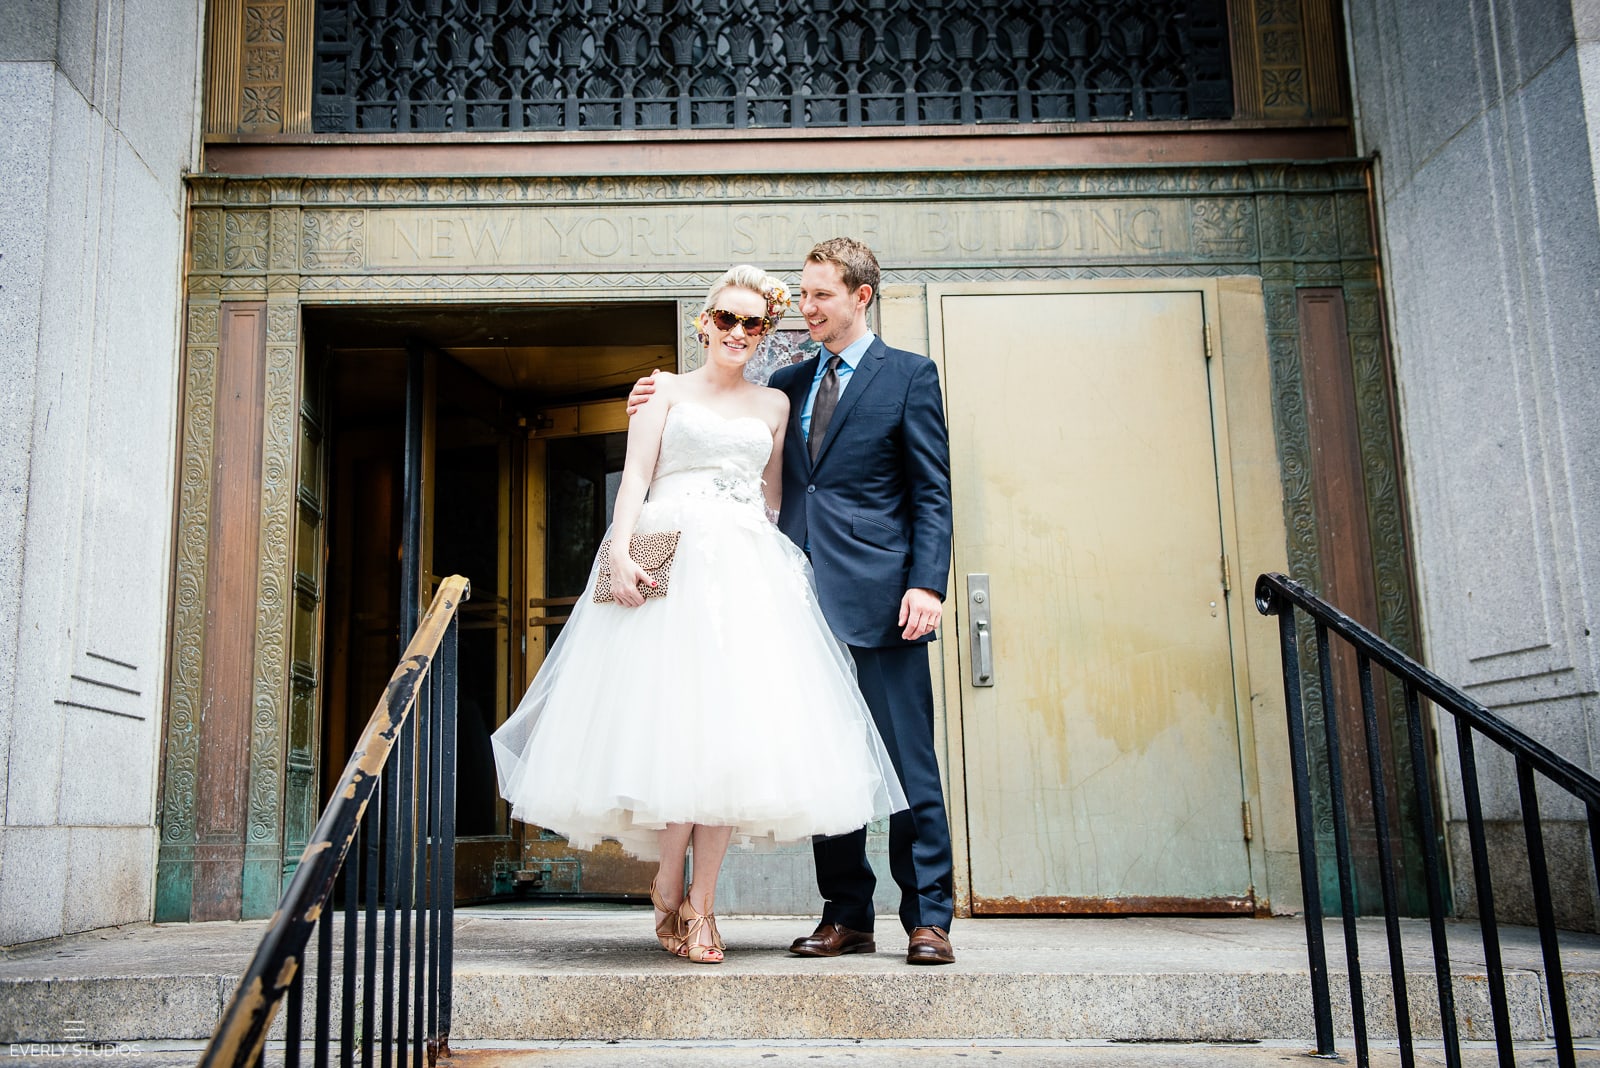 New York City Hall wedding. Photos by New York wedding photographer Everly Studios, www.everlystudios.com